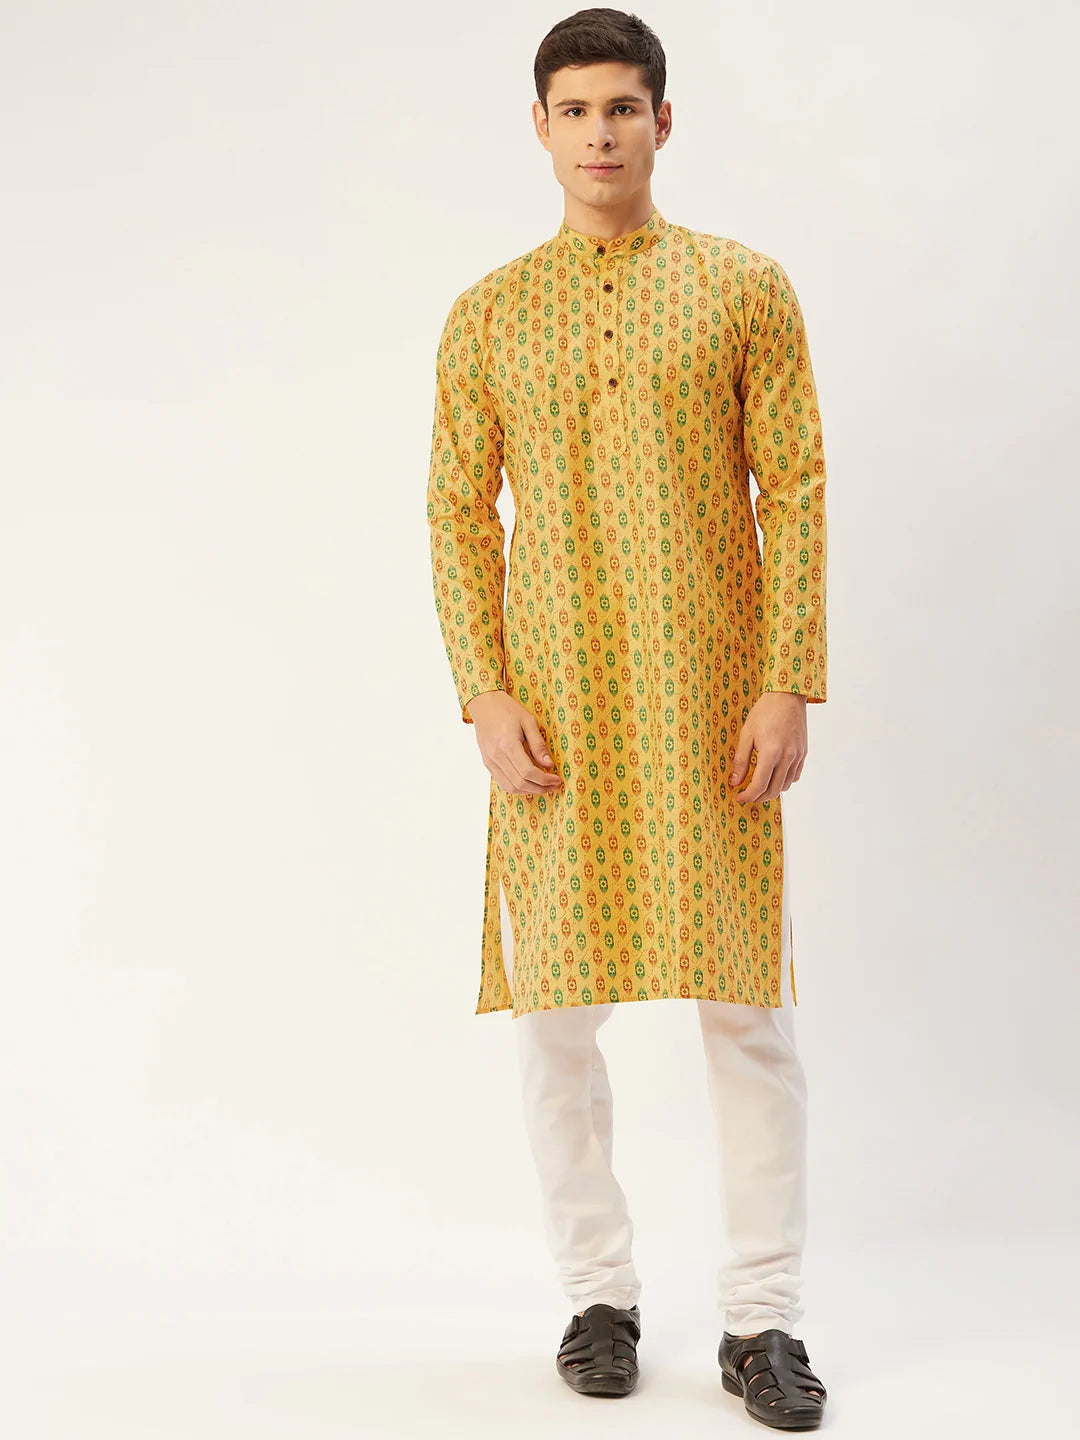 Jompers Men's Mustard Cotton Ikat printed kurta Pyjama Set ( JOKP 651 Mustard )